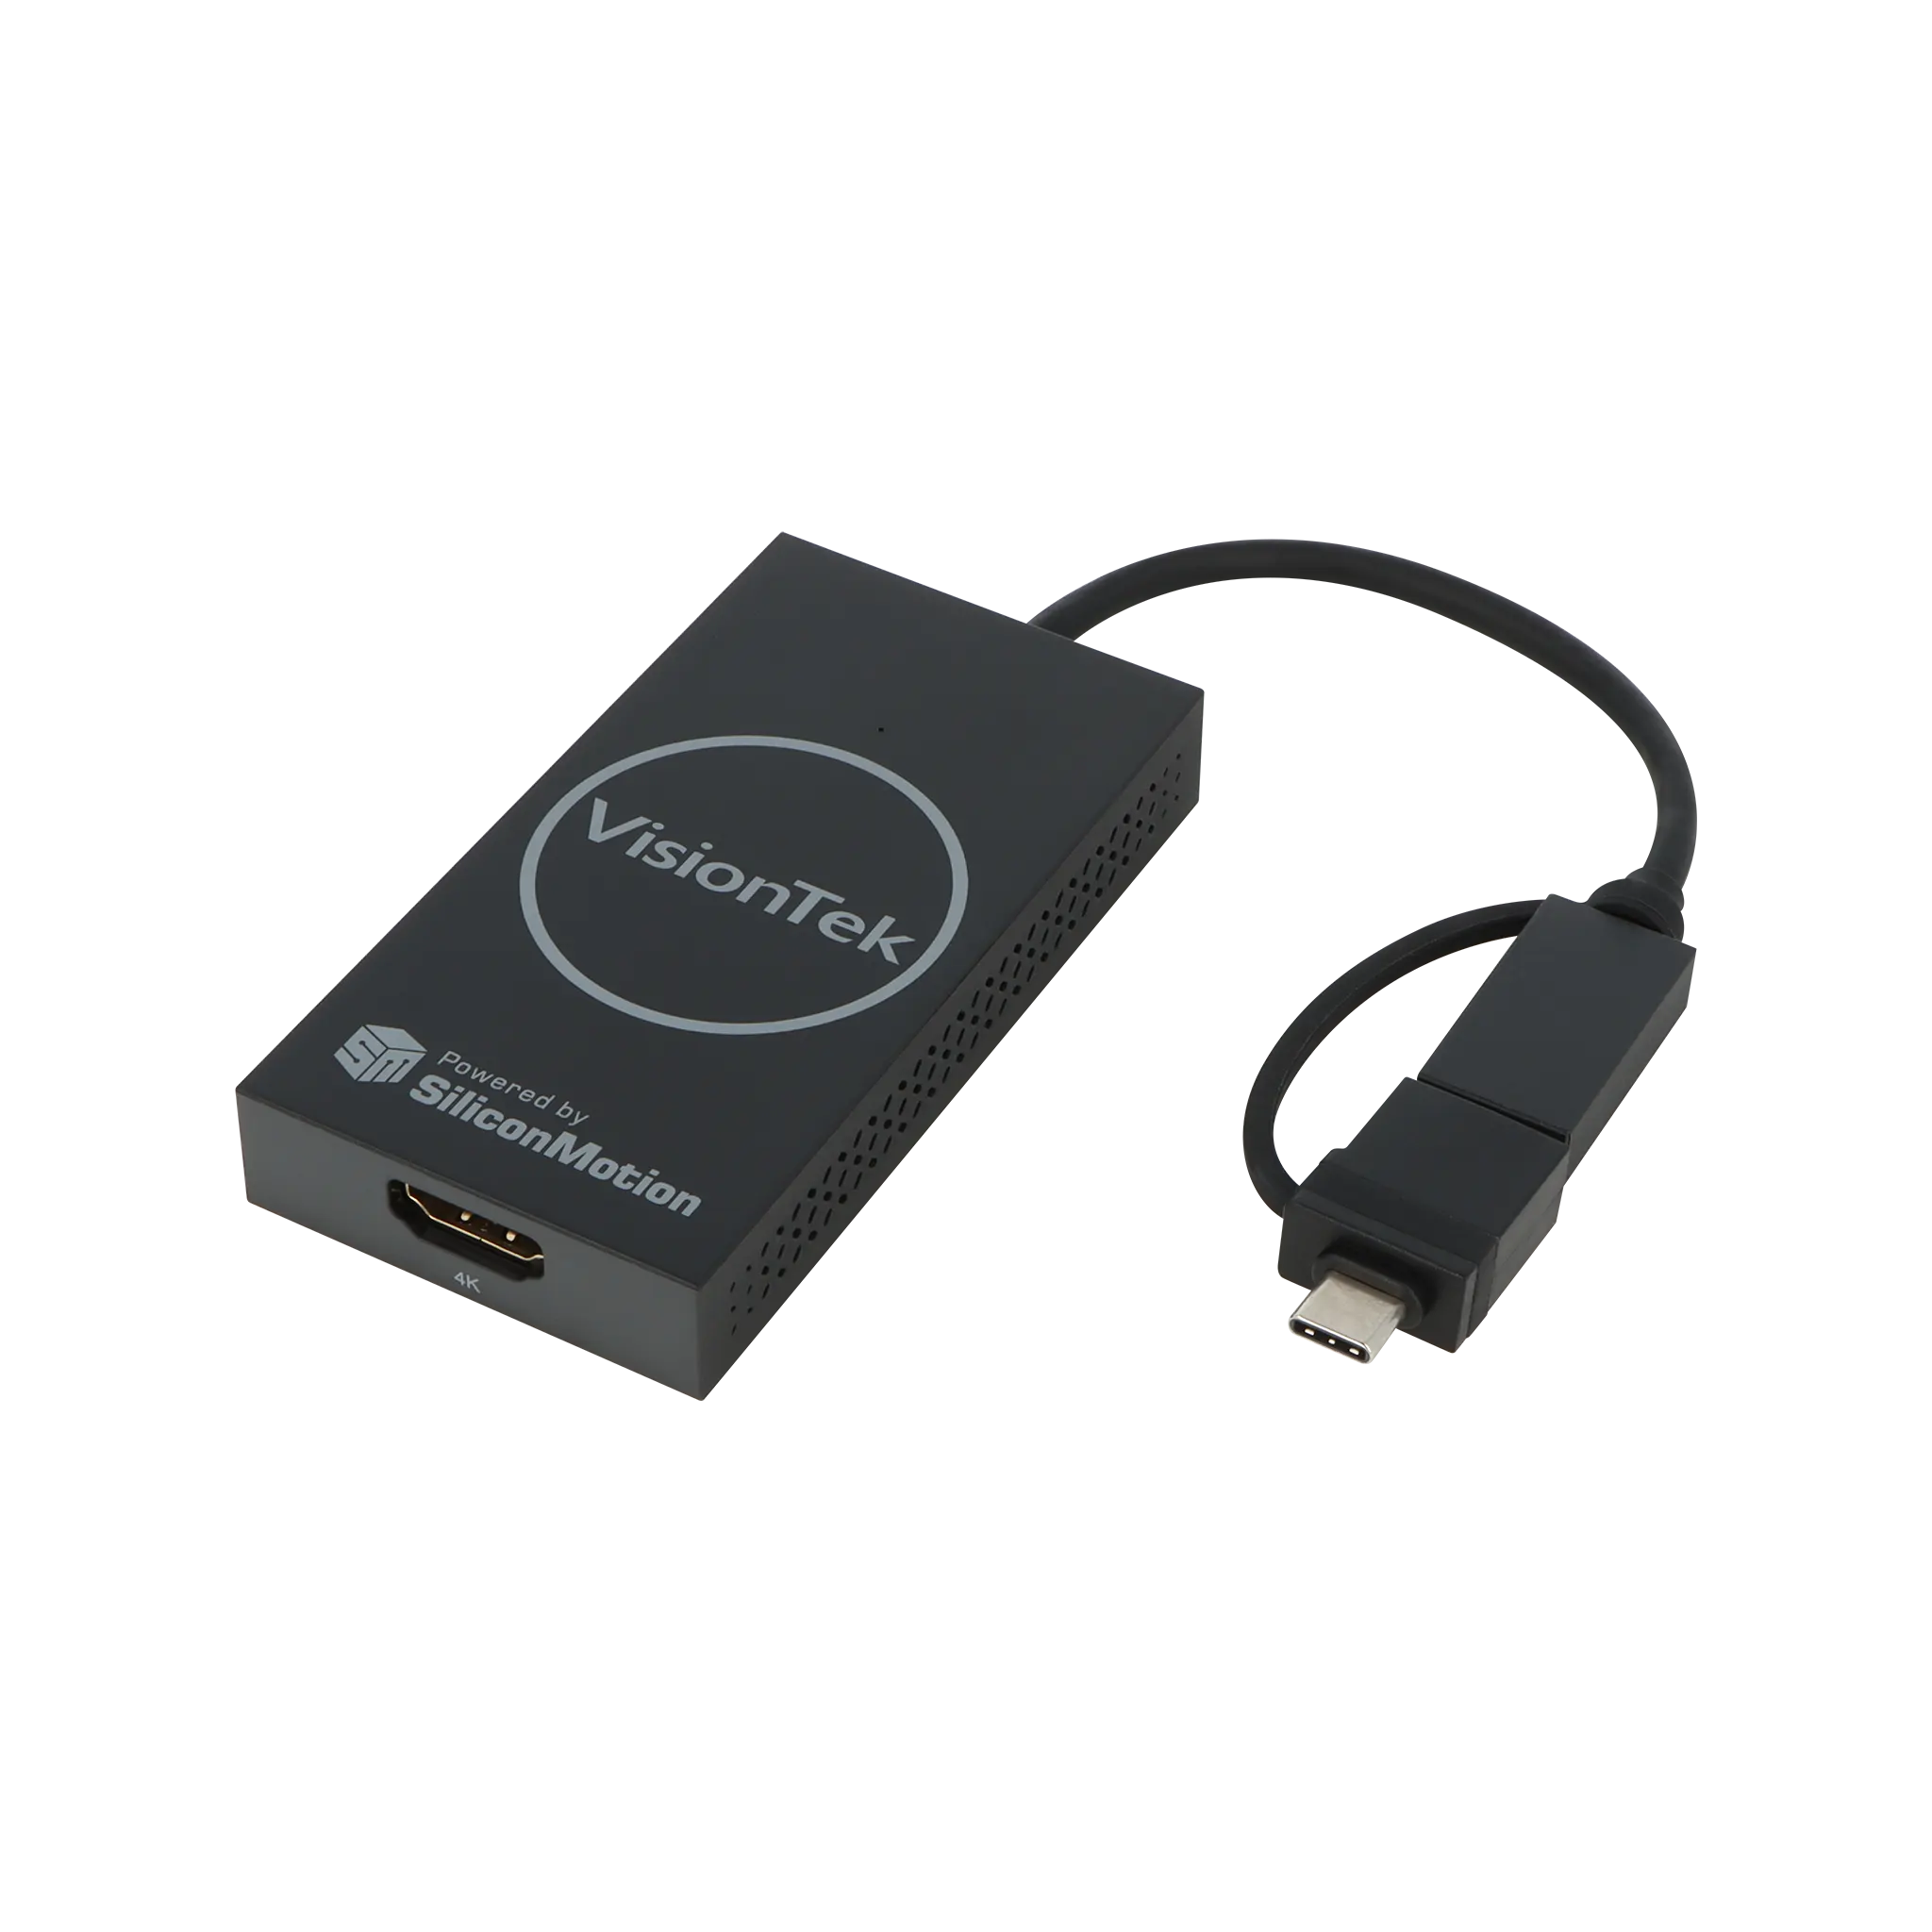 VT90 3.0 HDMI Adapter – VisionTek.com